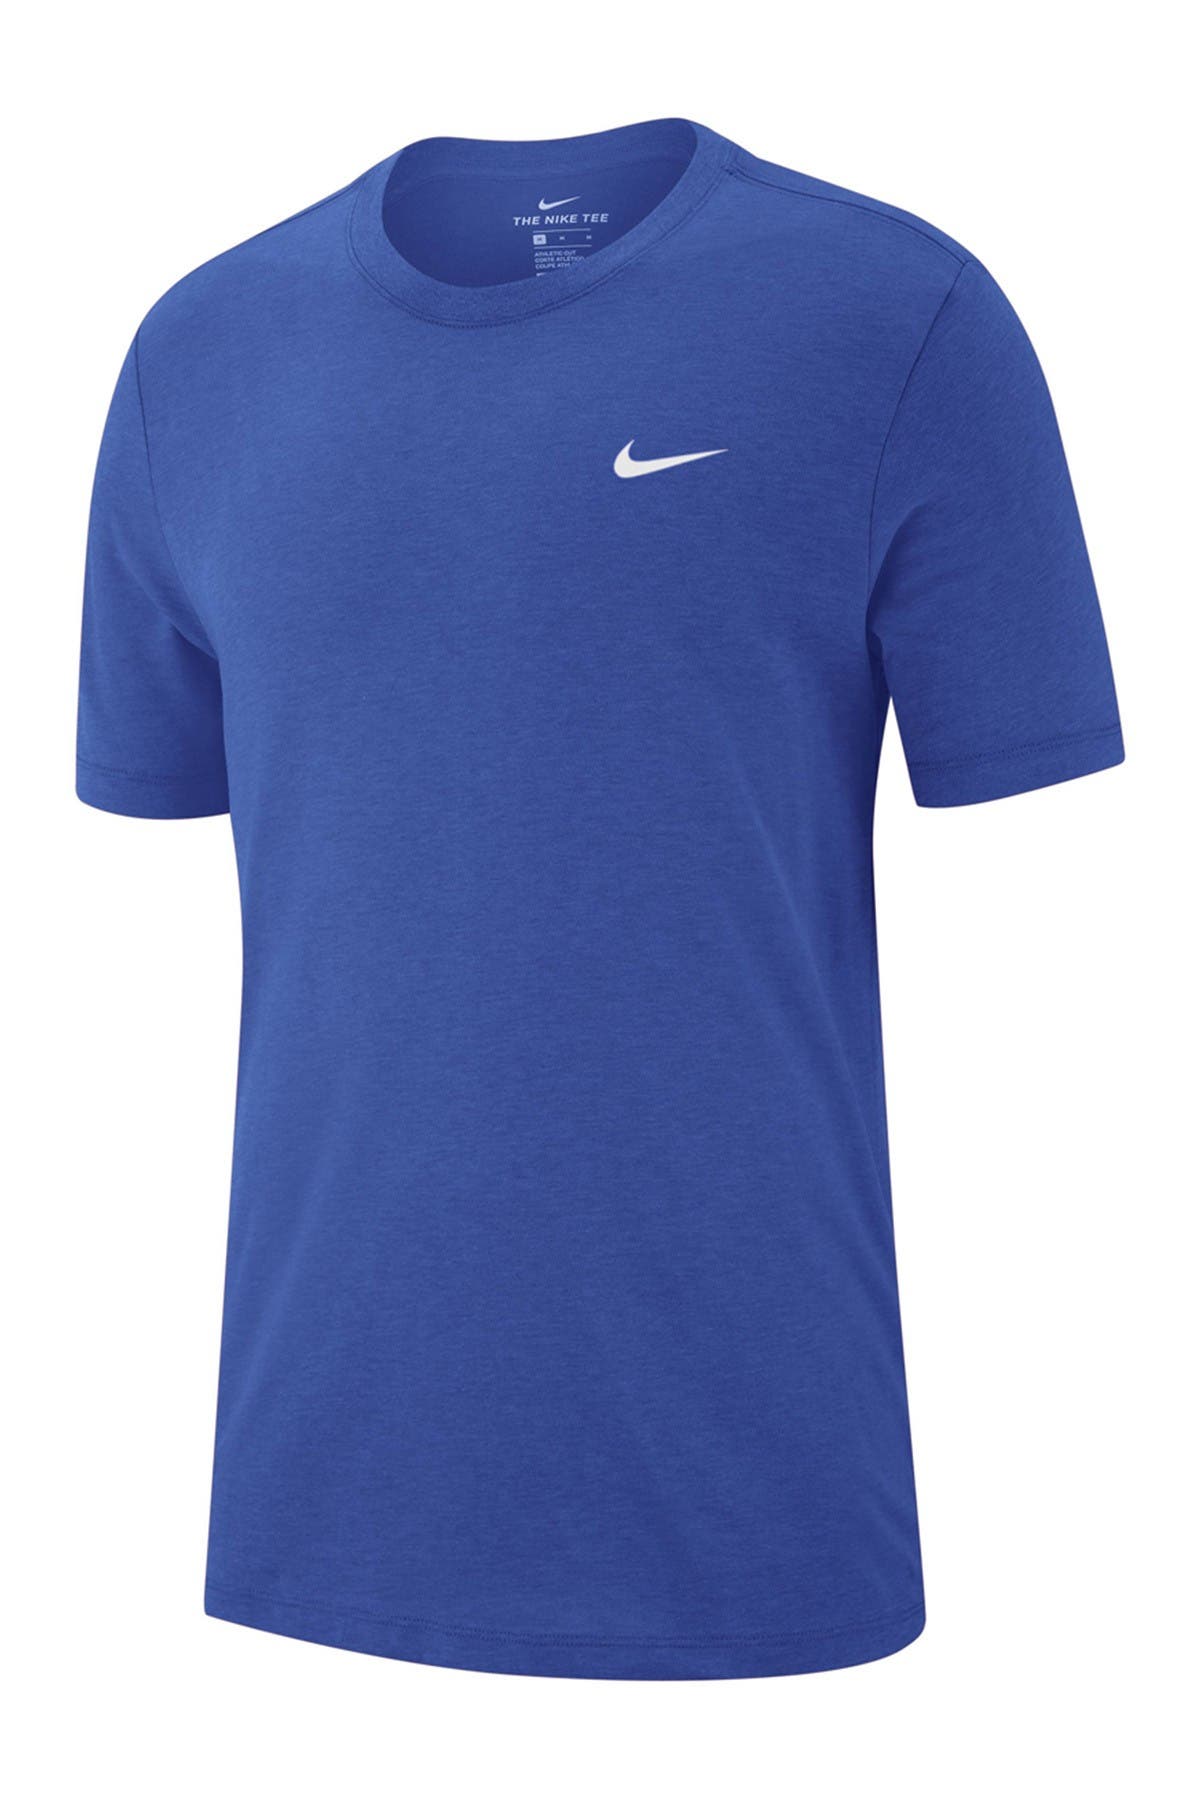 Nike Dri-fit Crew Training T-shirt In Open Blue20